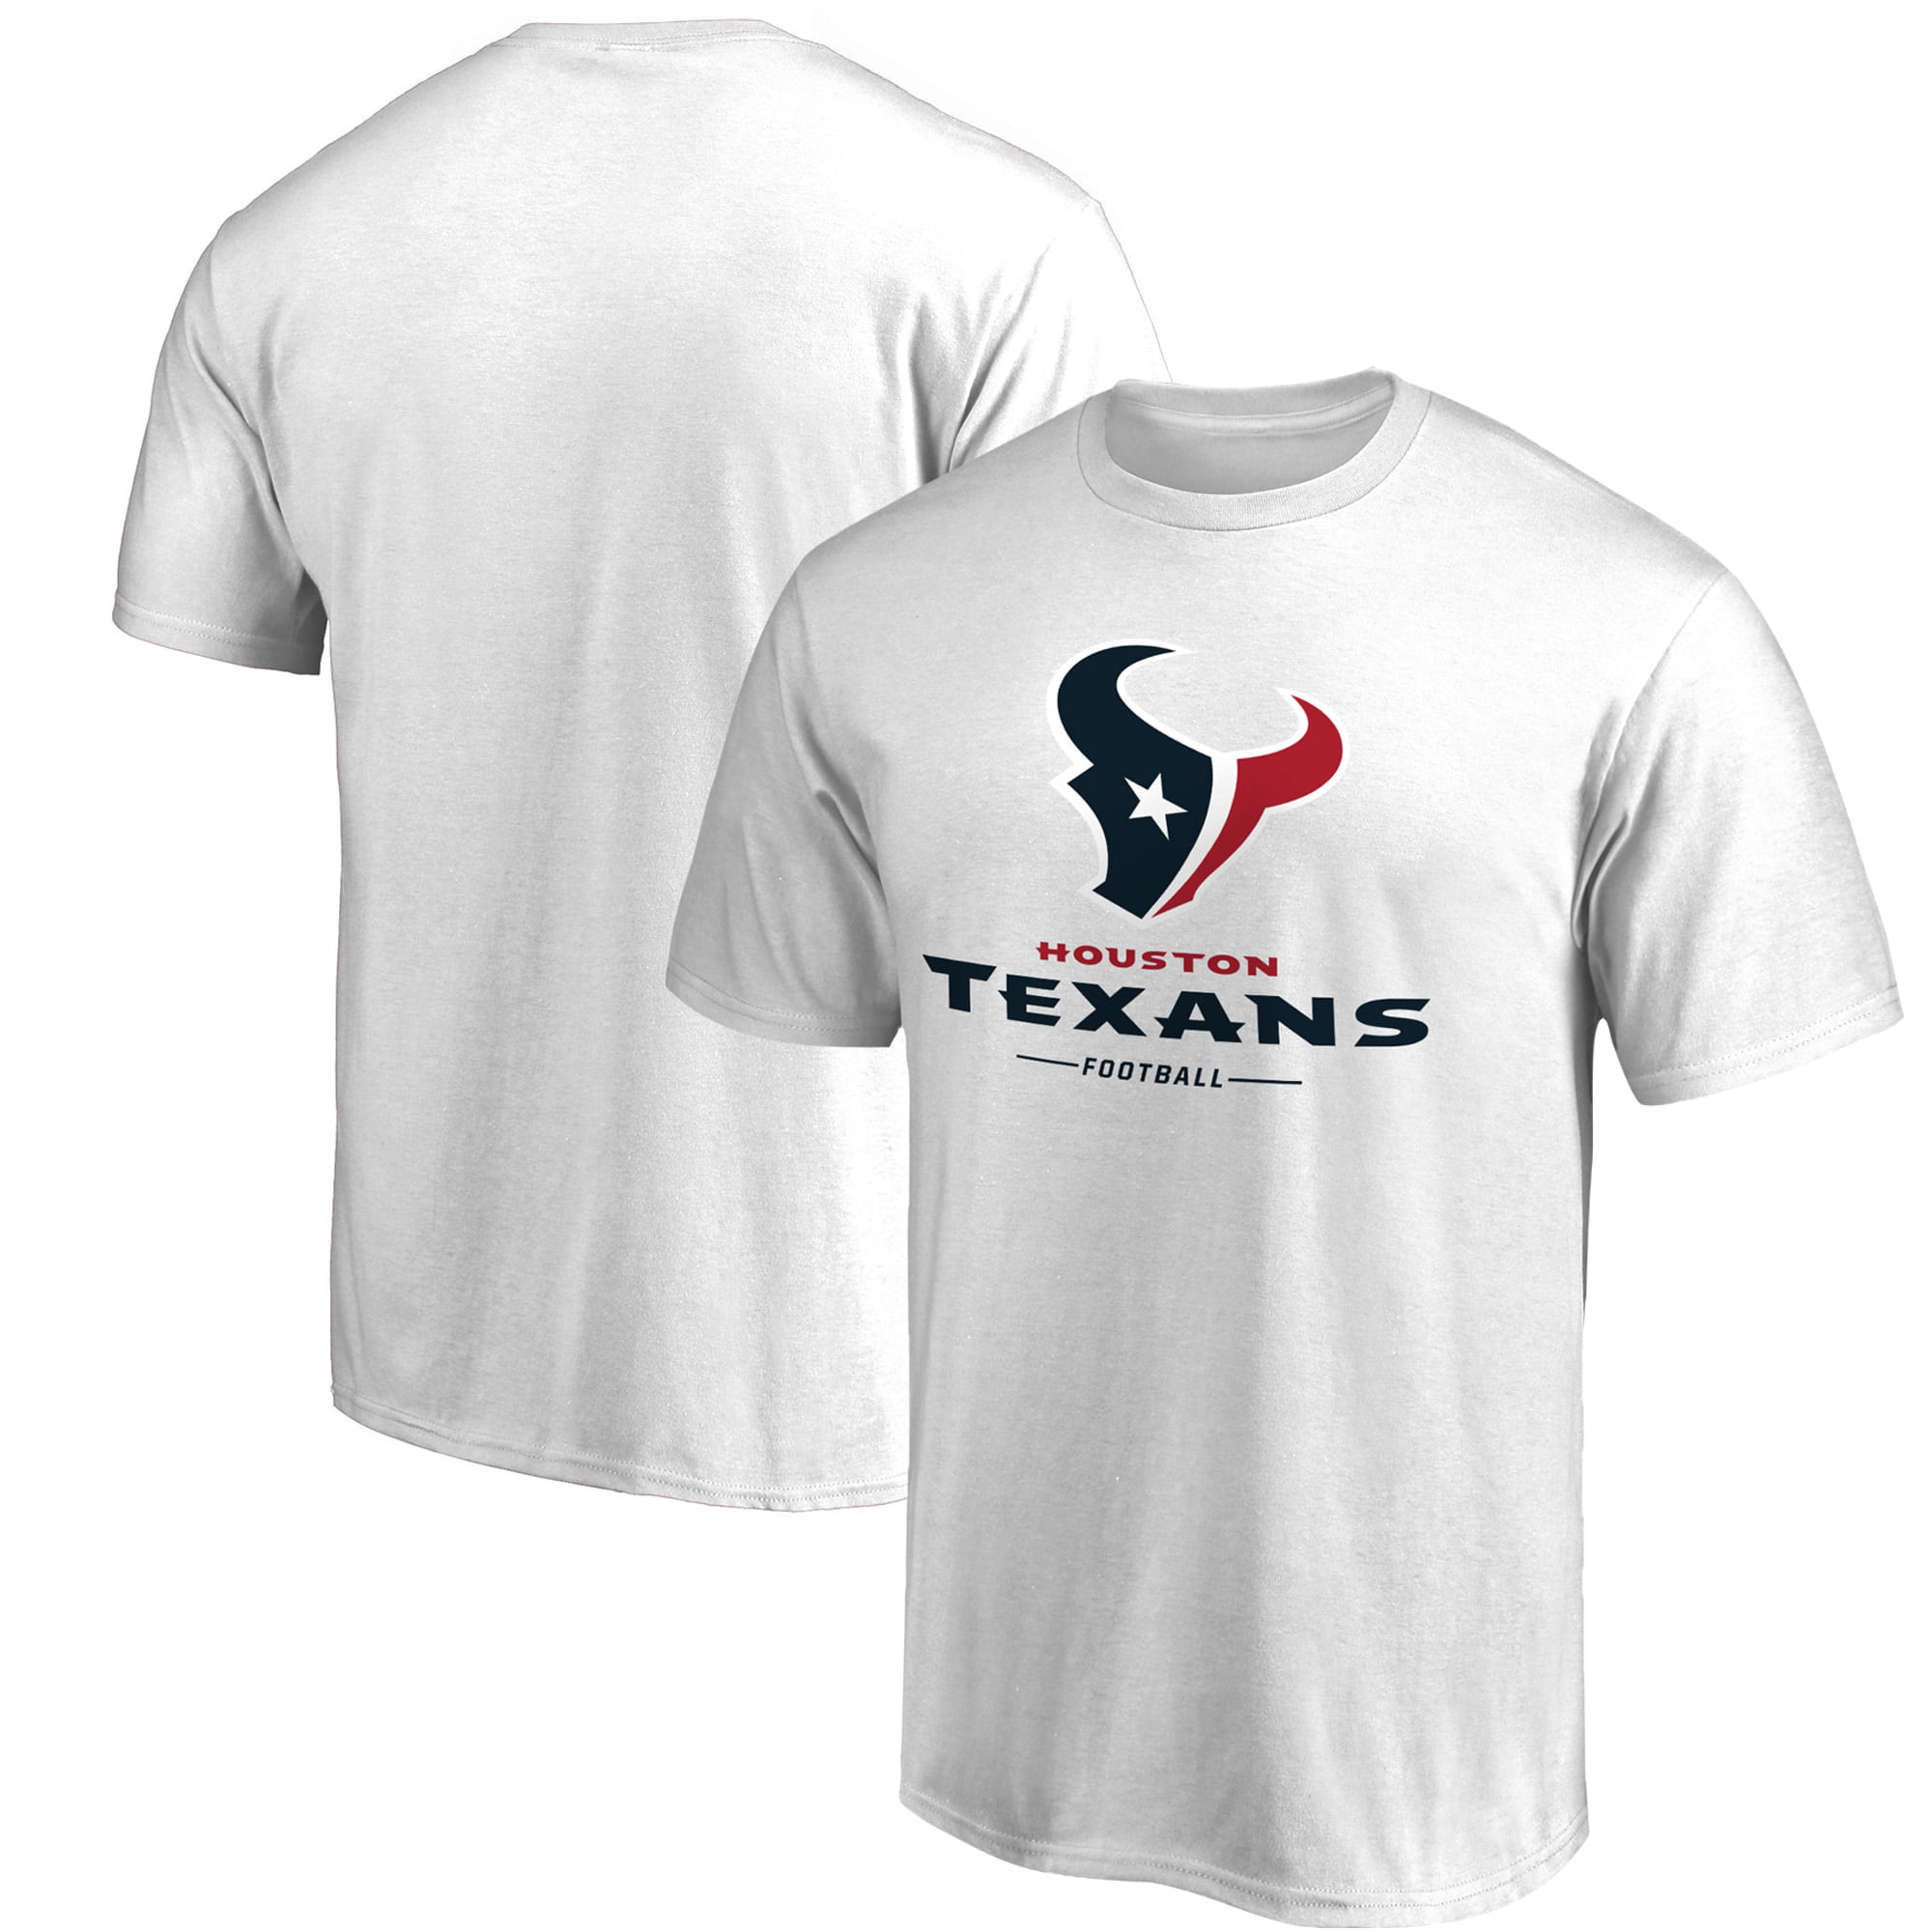 texans shirts for men